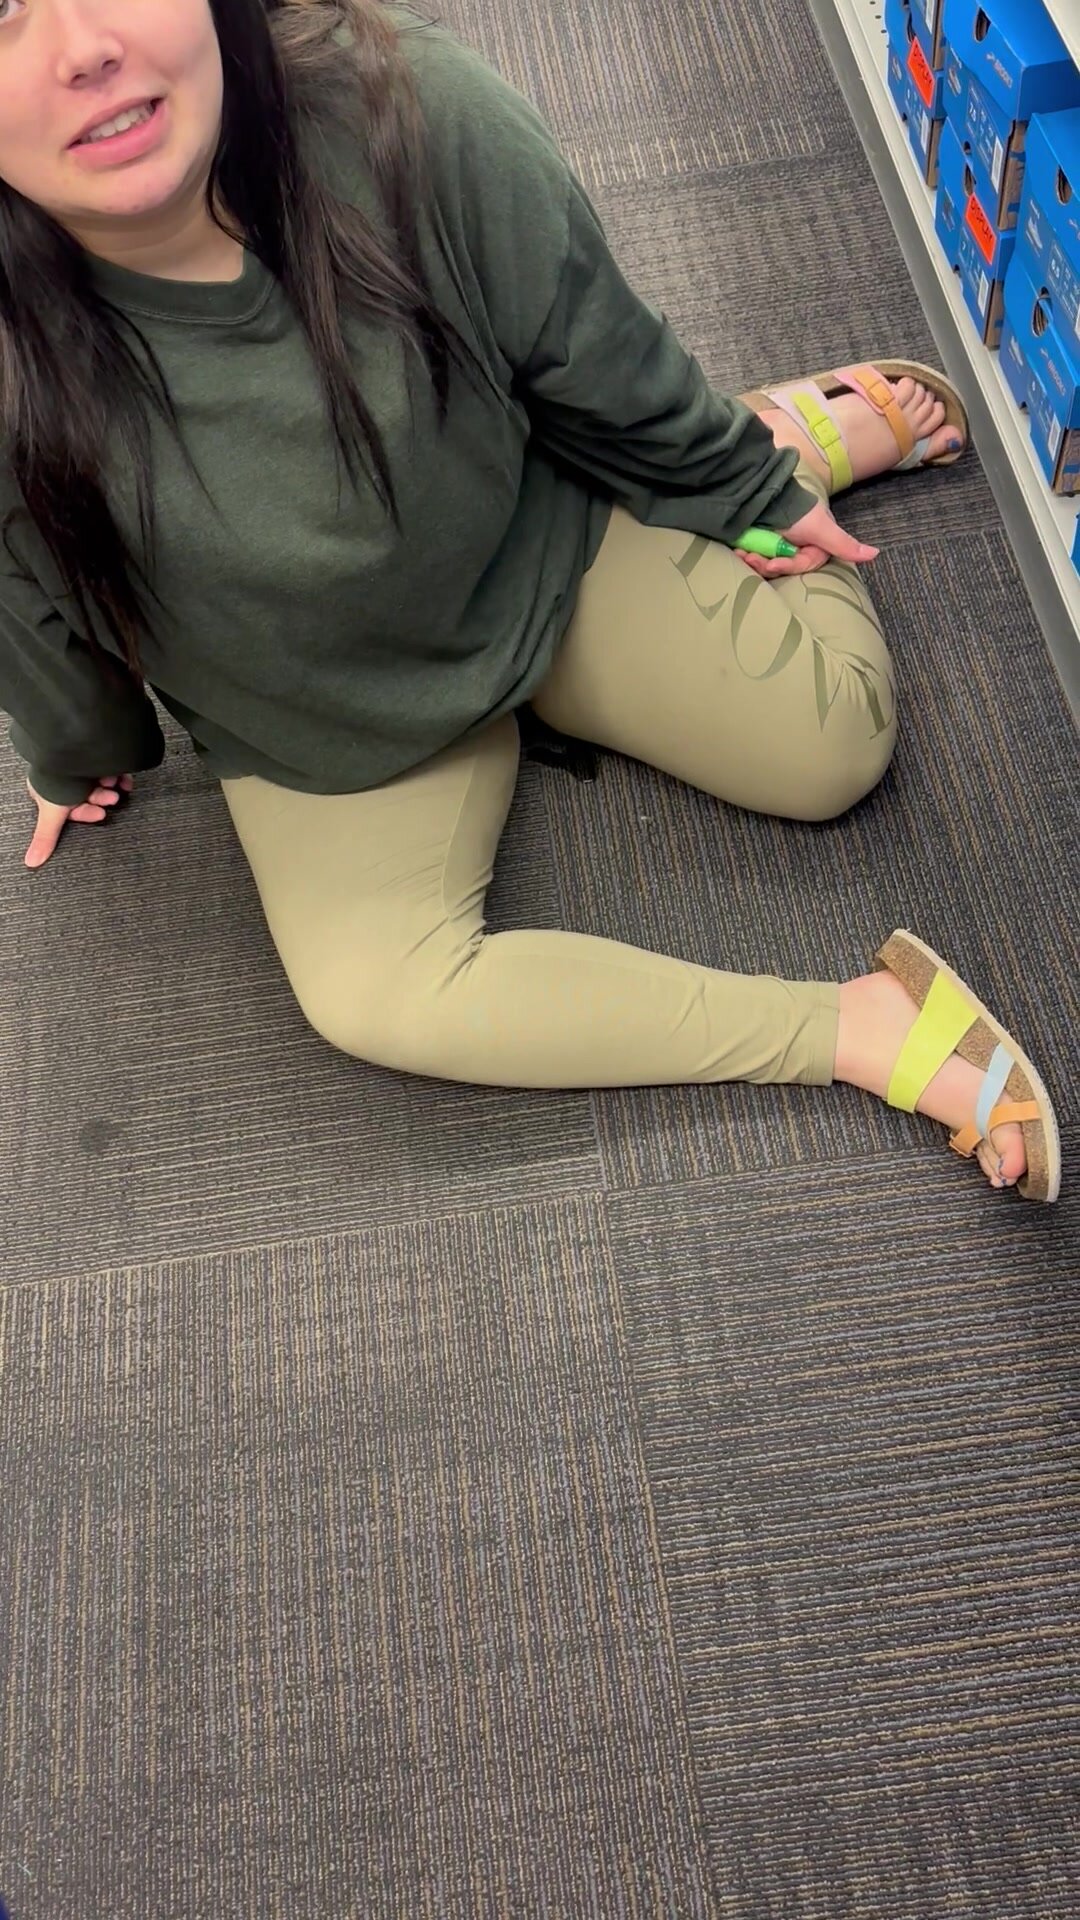 My girlfriend pisses her leggings in the store carpet